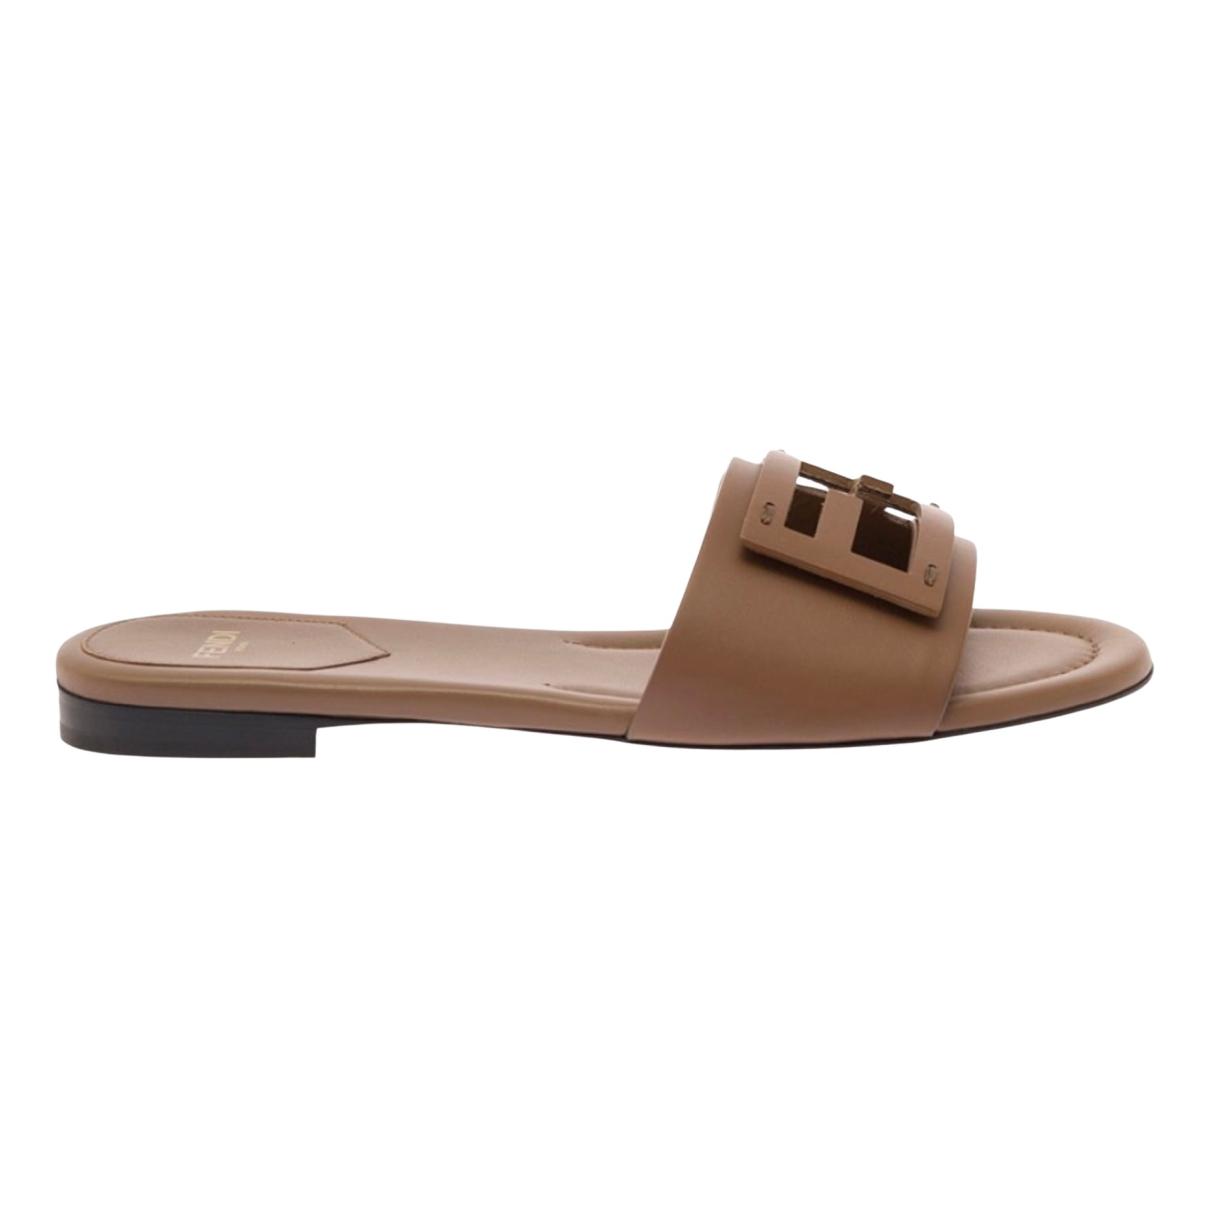 Leather sandal - 1